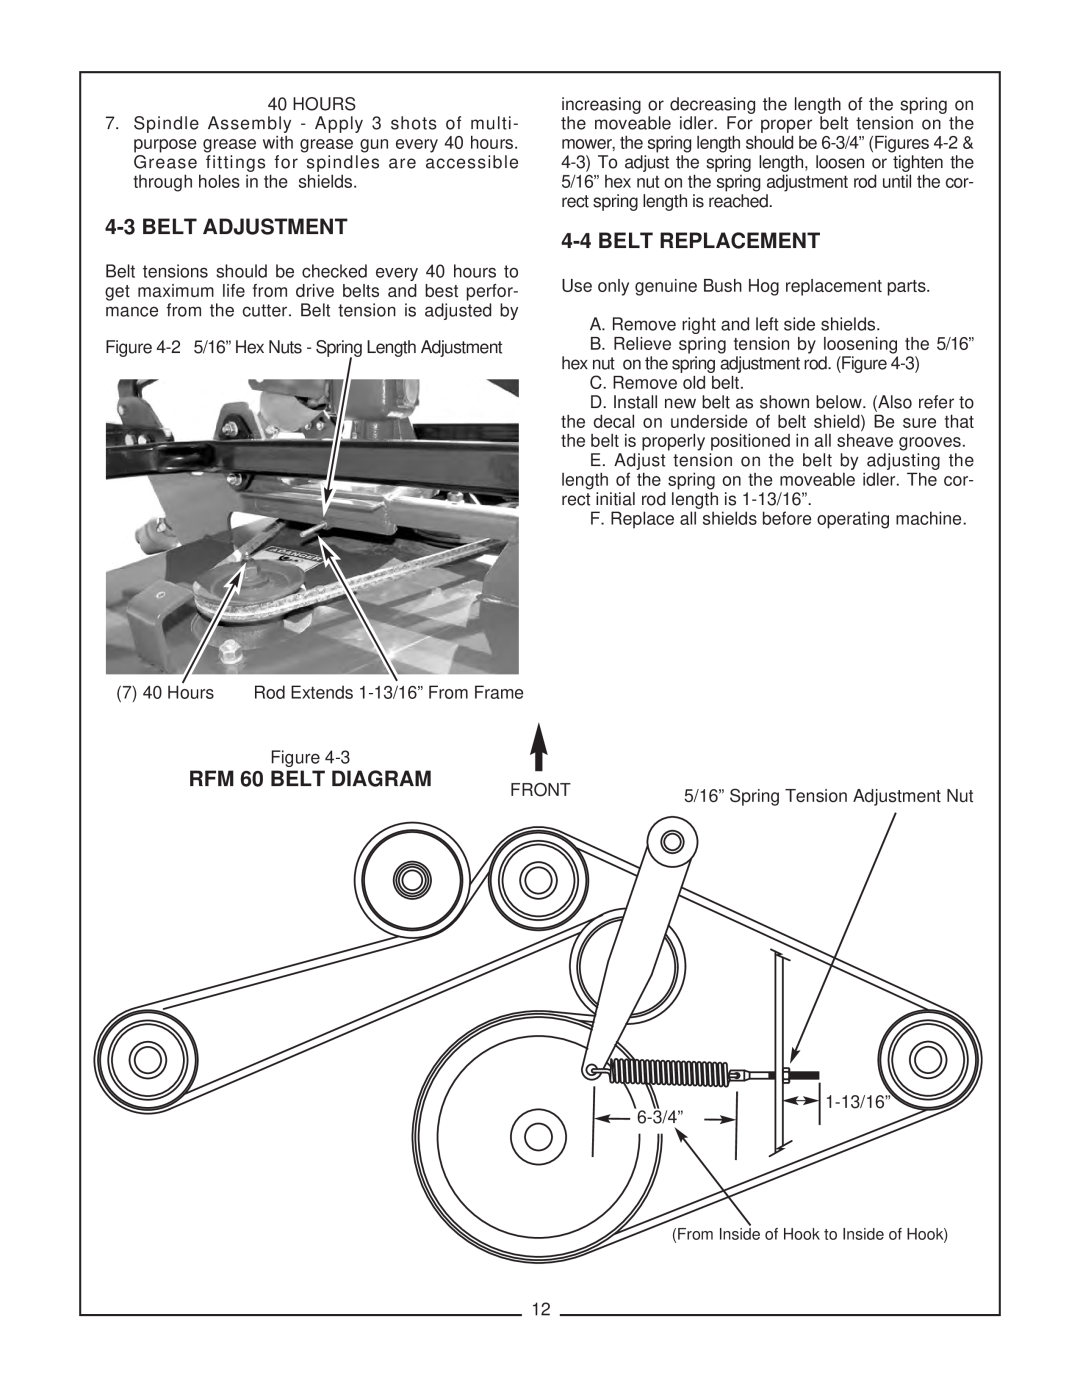 Bush Hog manual 4-3BELT ADJUSTMENT, 4-4BELT REPLACEMENT, RFM 60 BELT DIAGRAM 